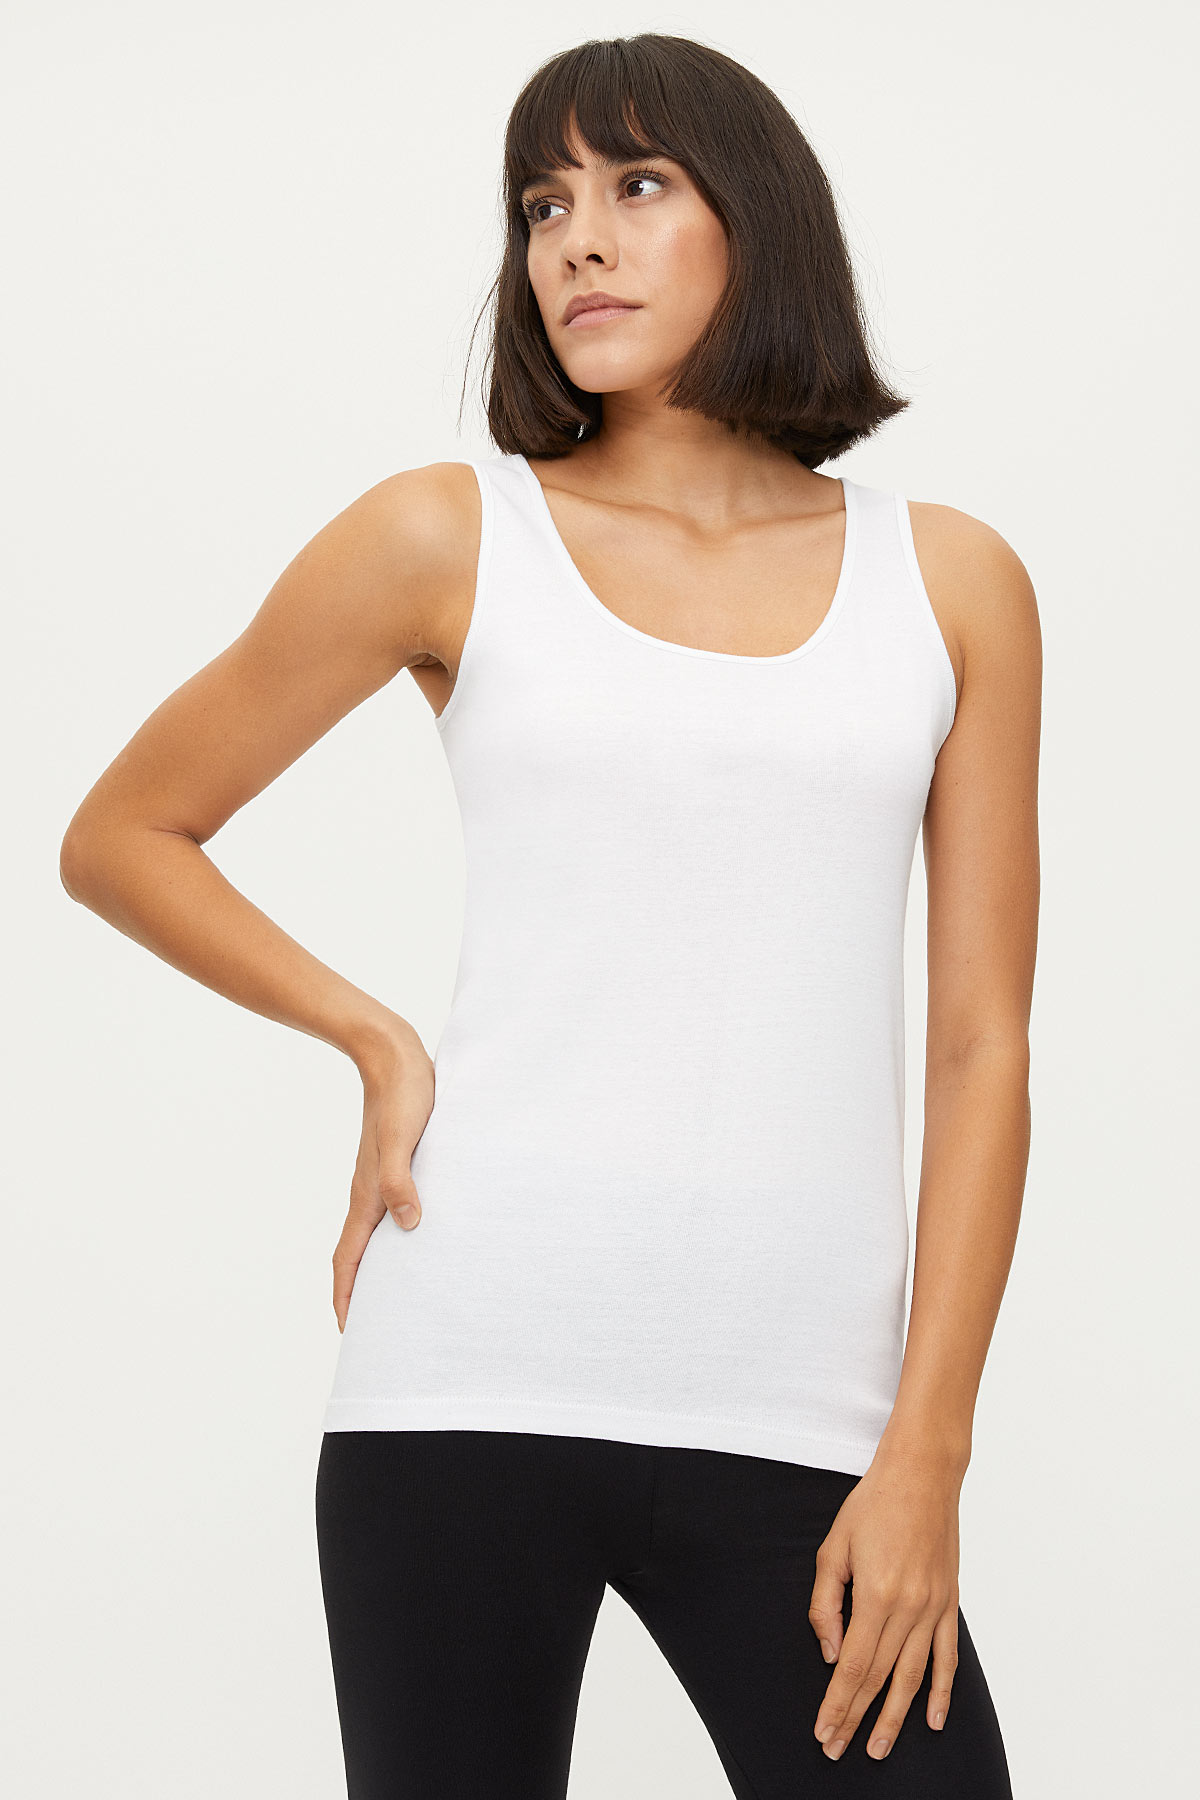 Bross - 1249 100% Cotton Wide Strappy Women's Undershirt